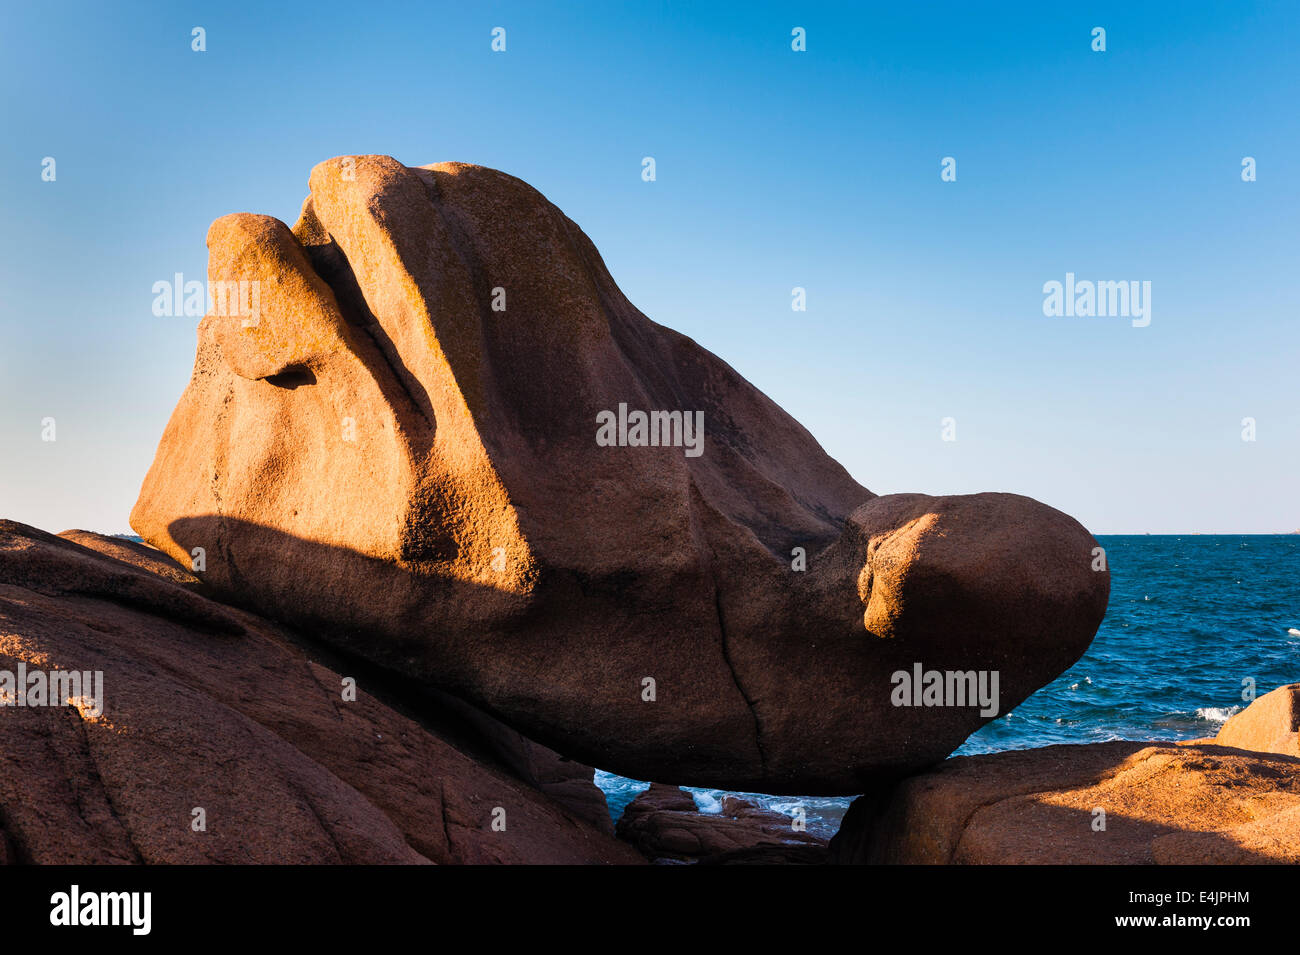 Cote de Granit Rose, ocean beach in sunny day Stock Photo